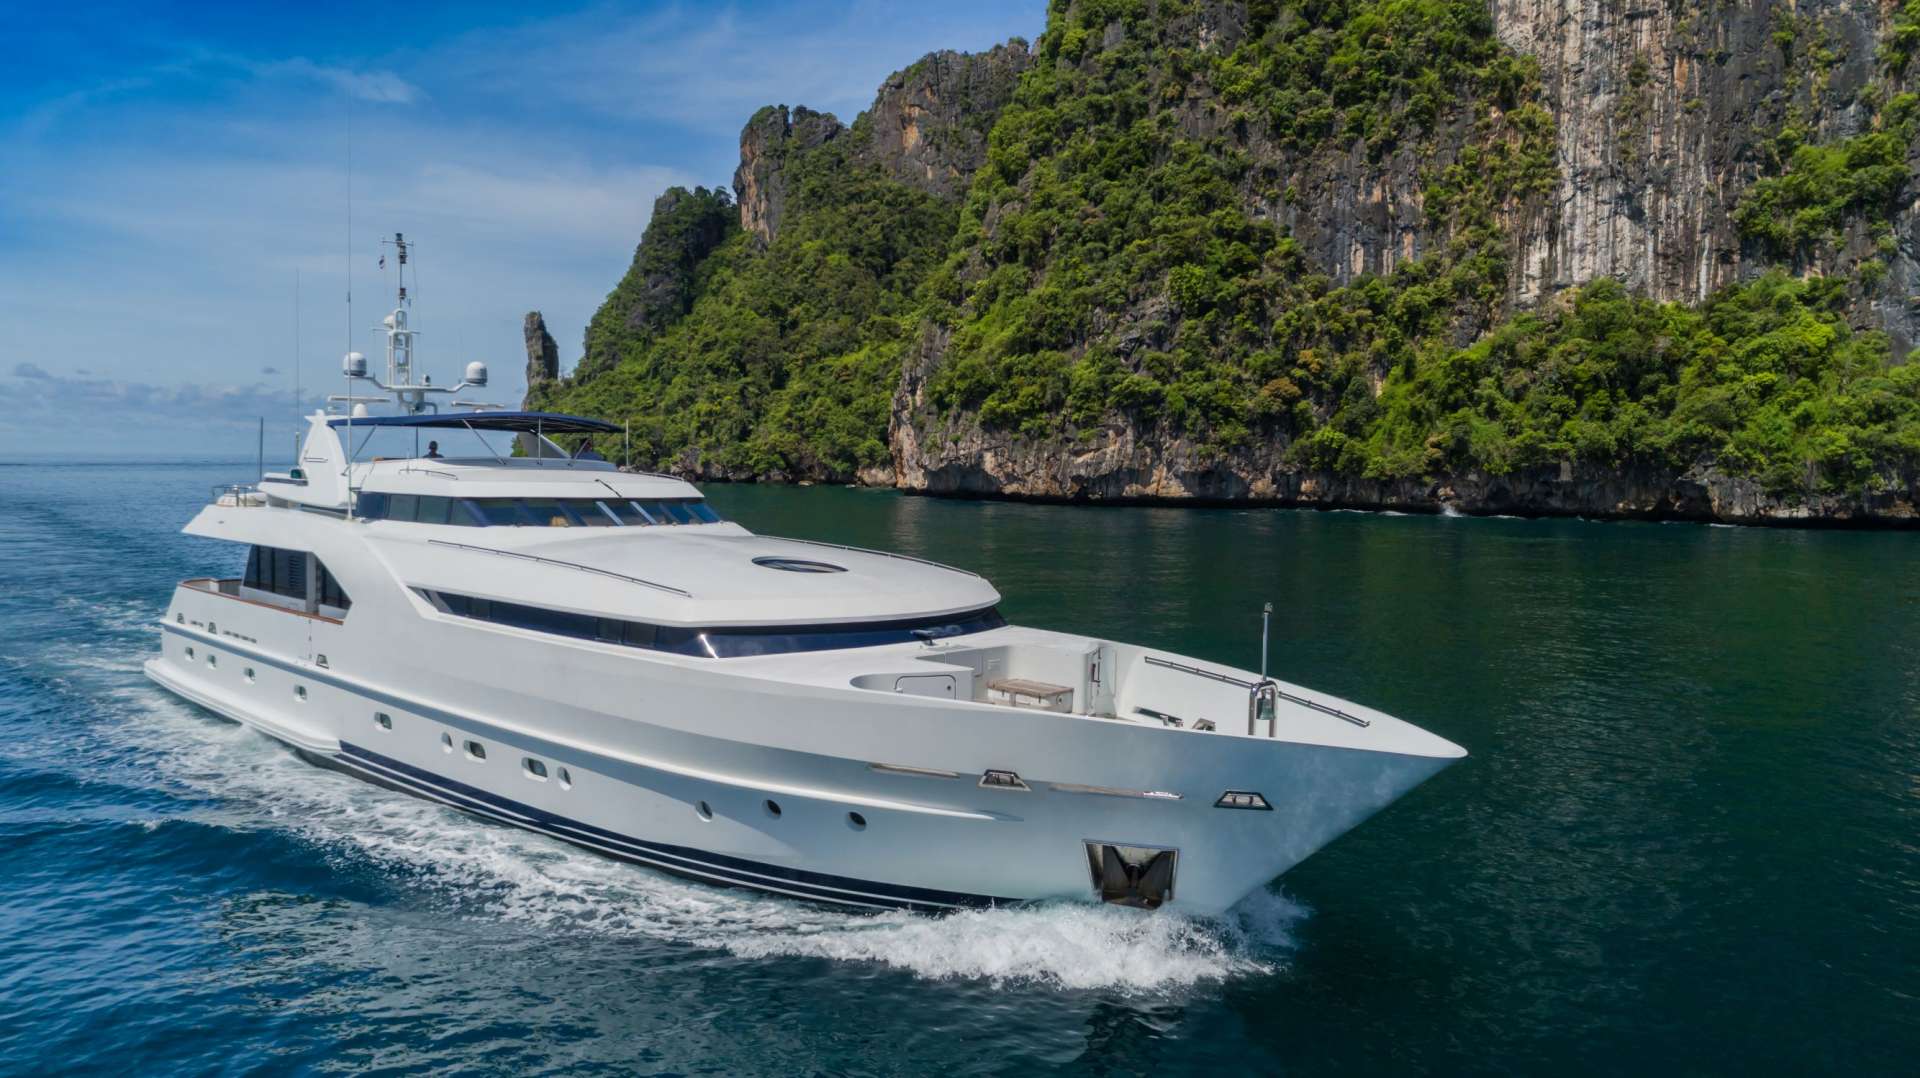 xanadu of london - Yacht Charter Koh Samui & Boat hire in SE Asia 1